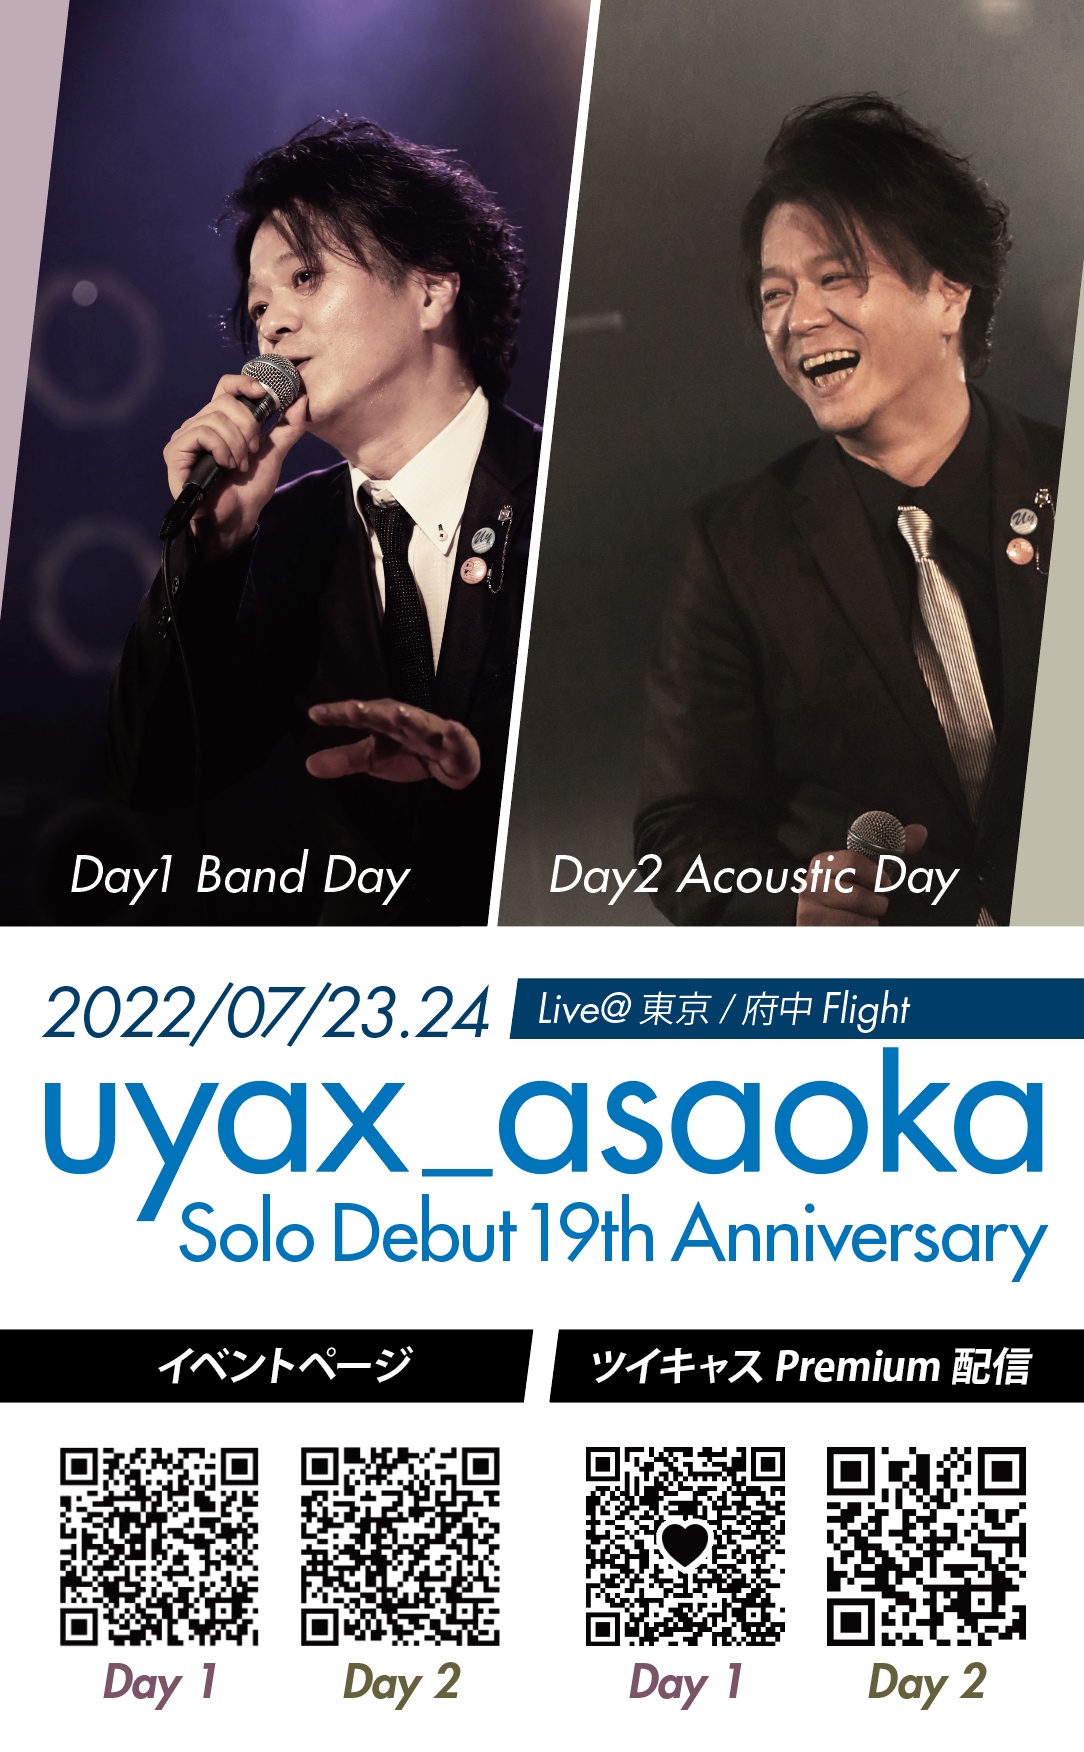 【DAY2】U-ya Asaoka Solo Debut 19th Anniversary 【Acoustic】